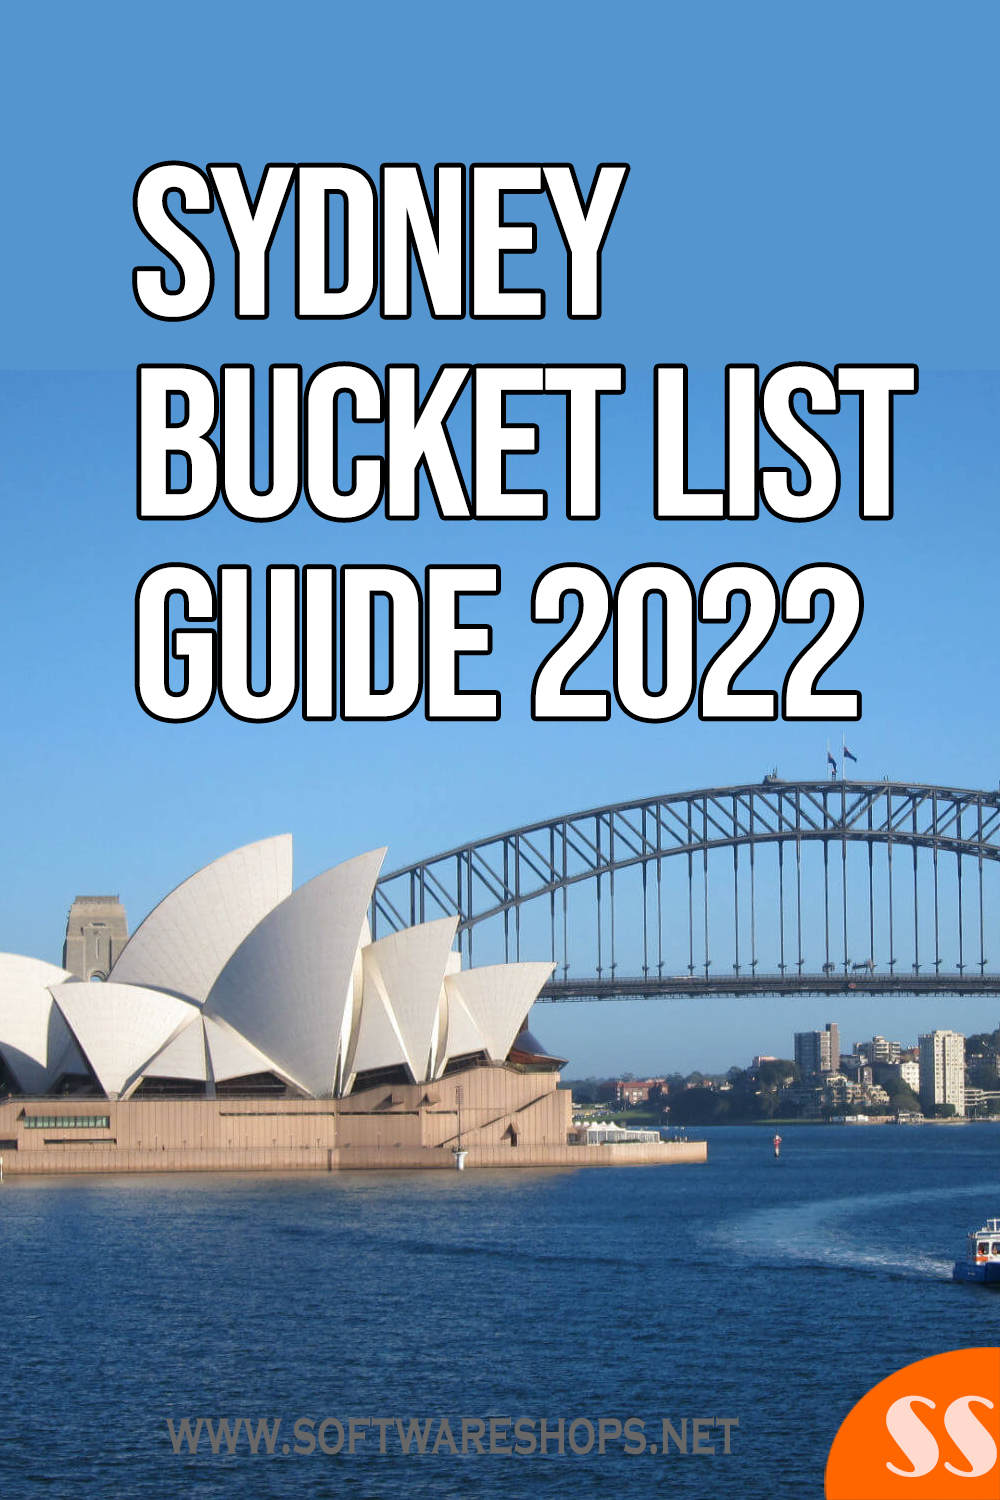 Sydney Bucket List Guide 2022